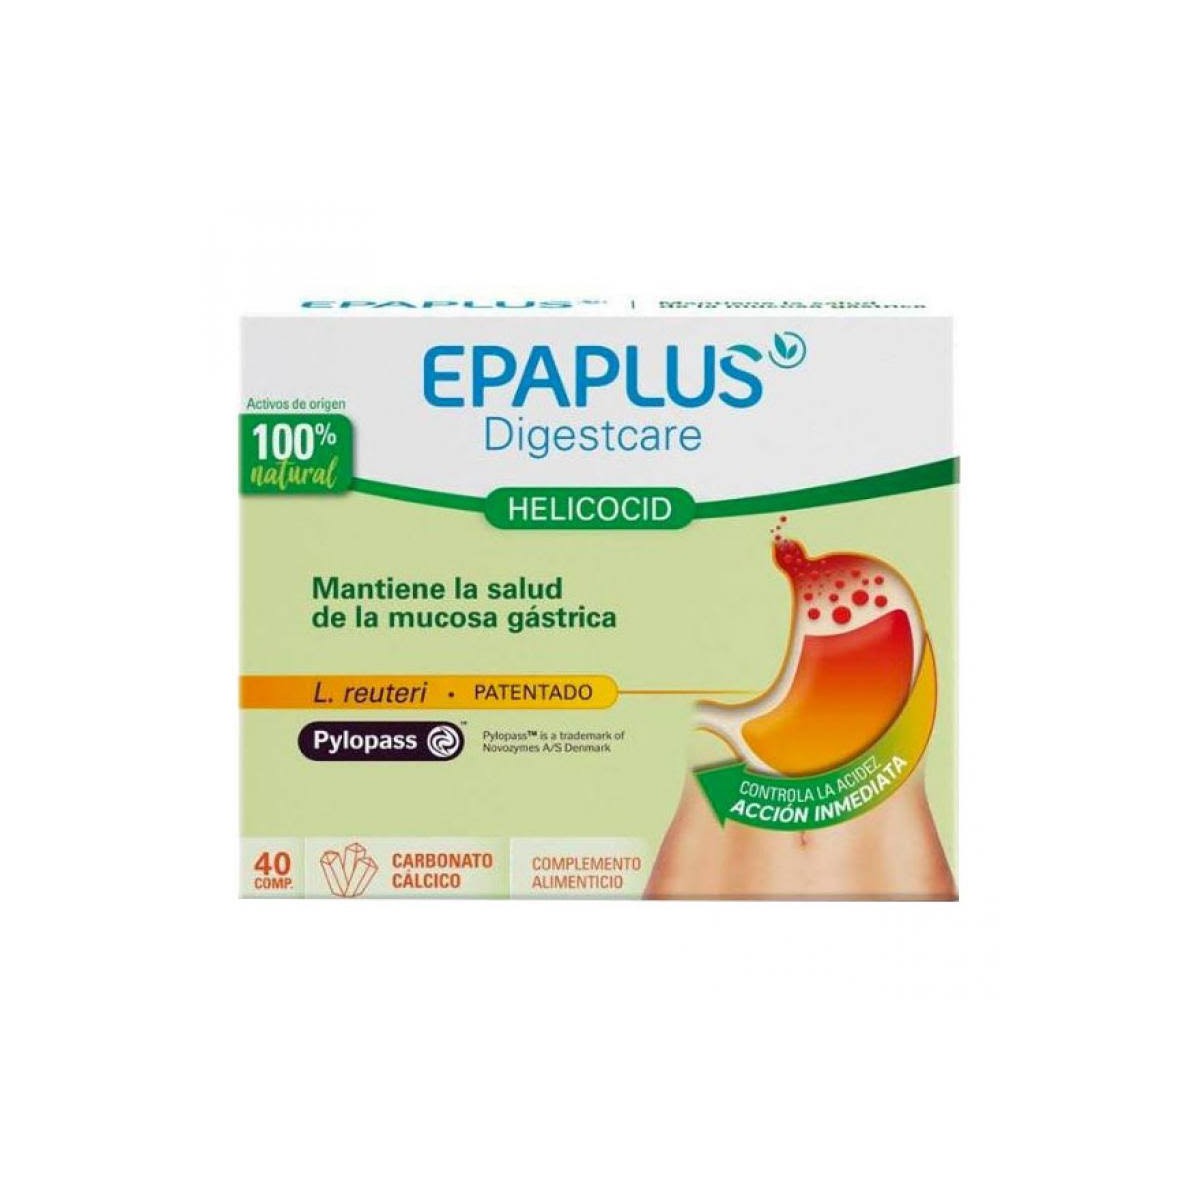 Epaplus DigestCare Helicocid 40 Comprimidos